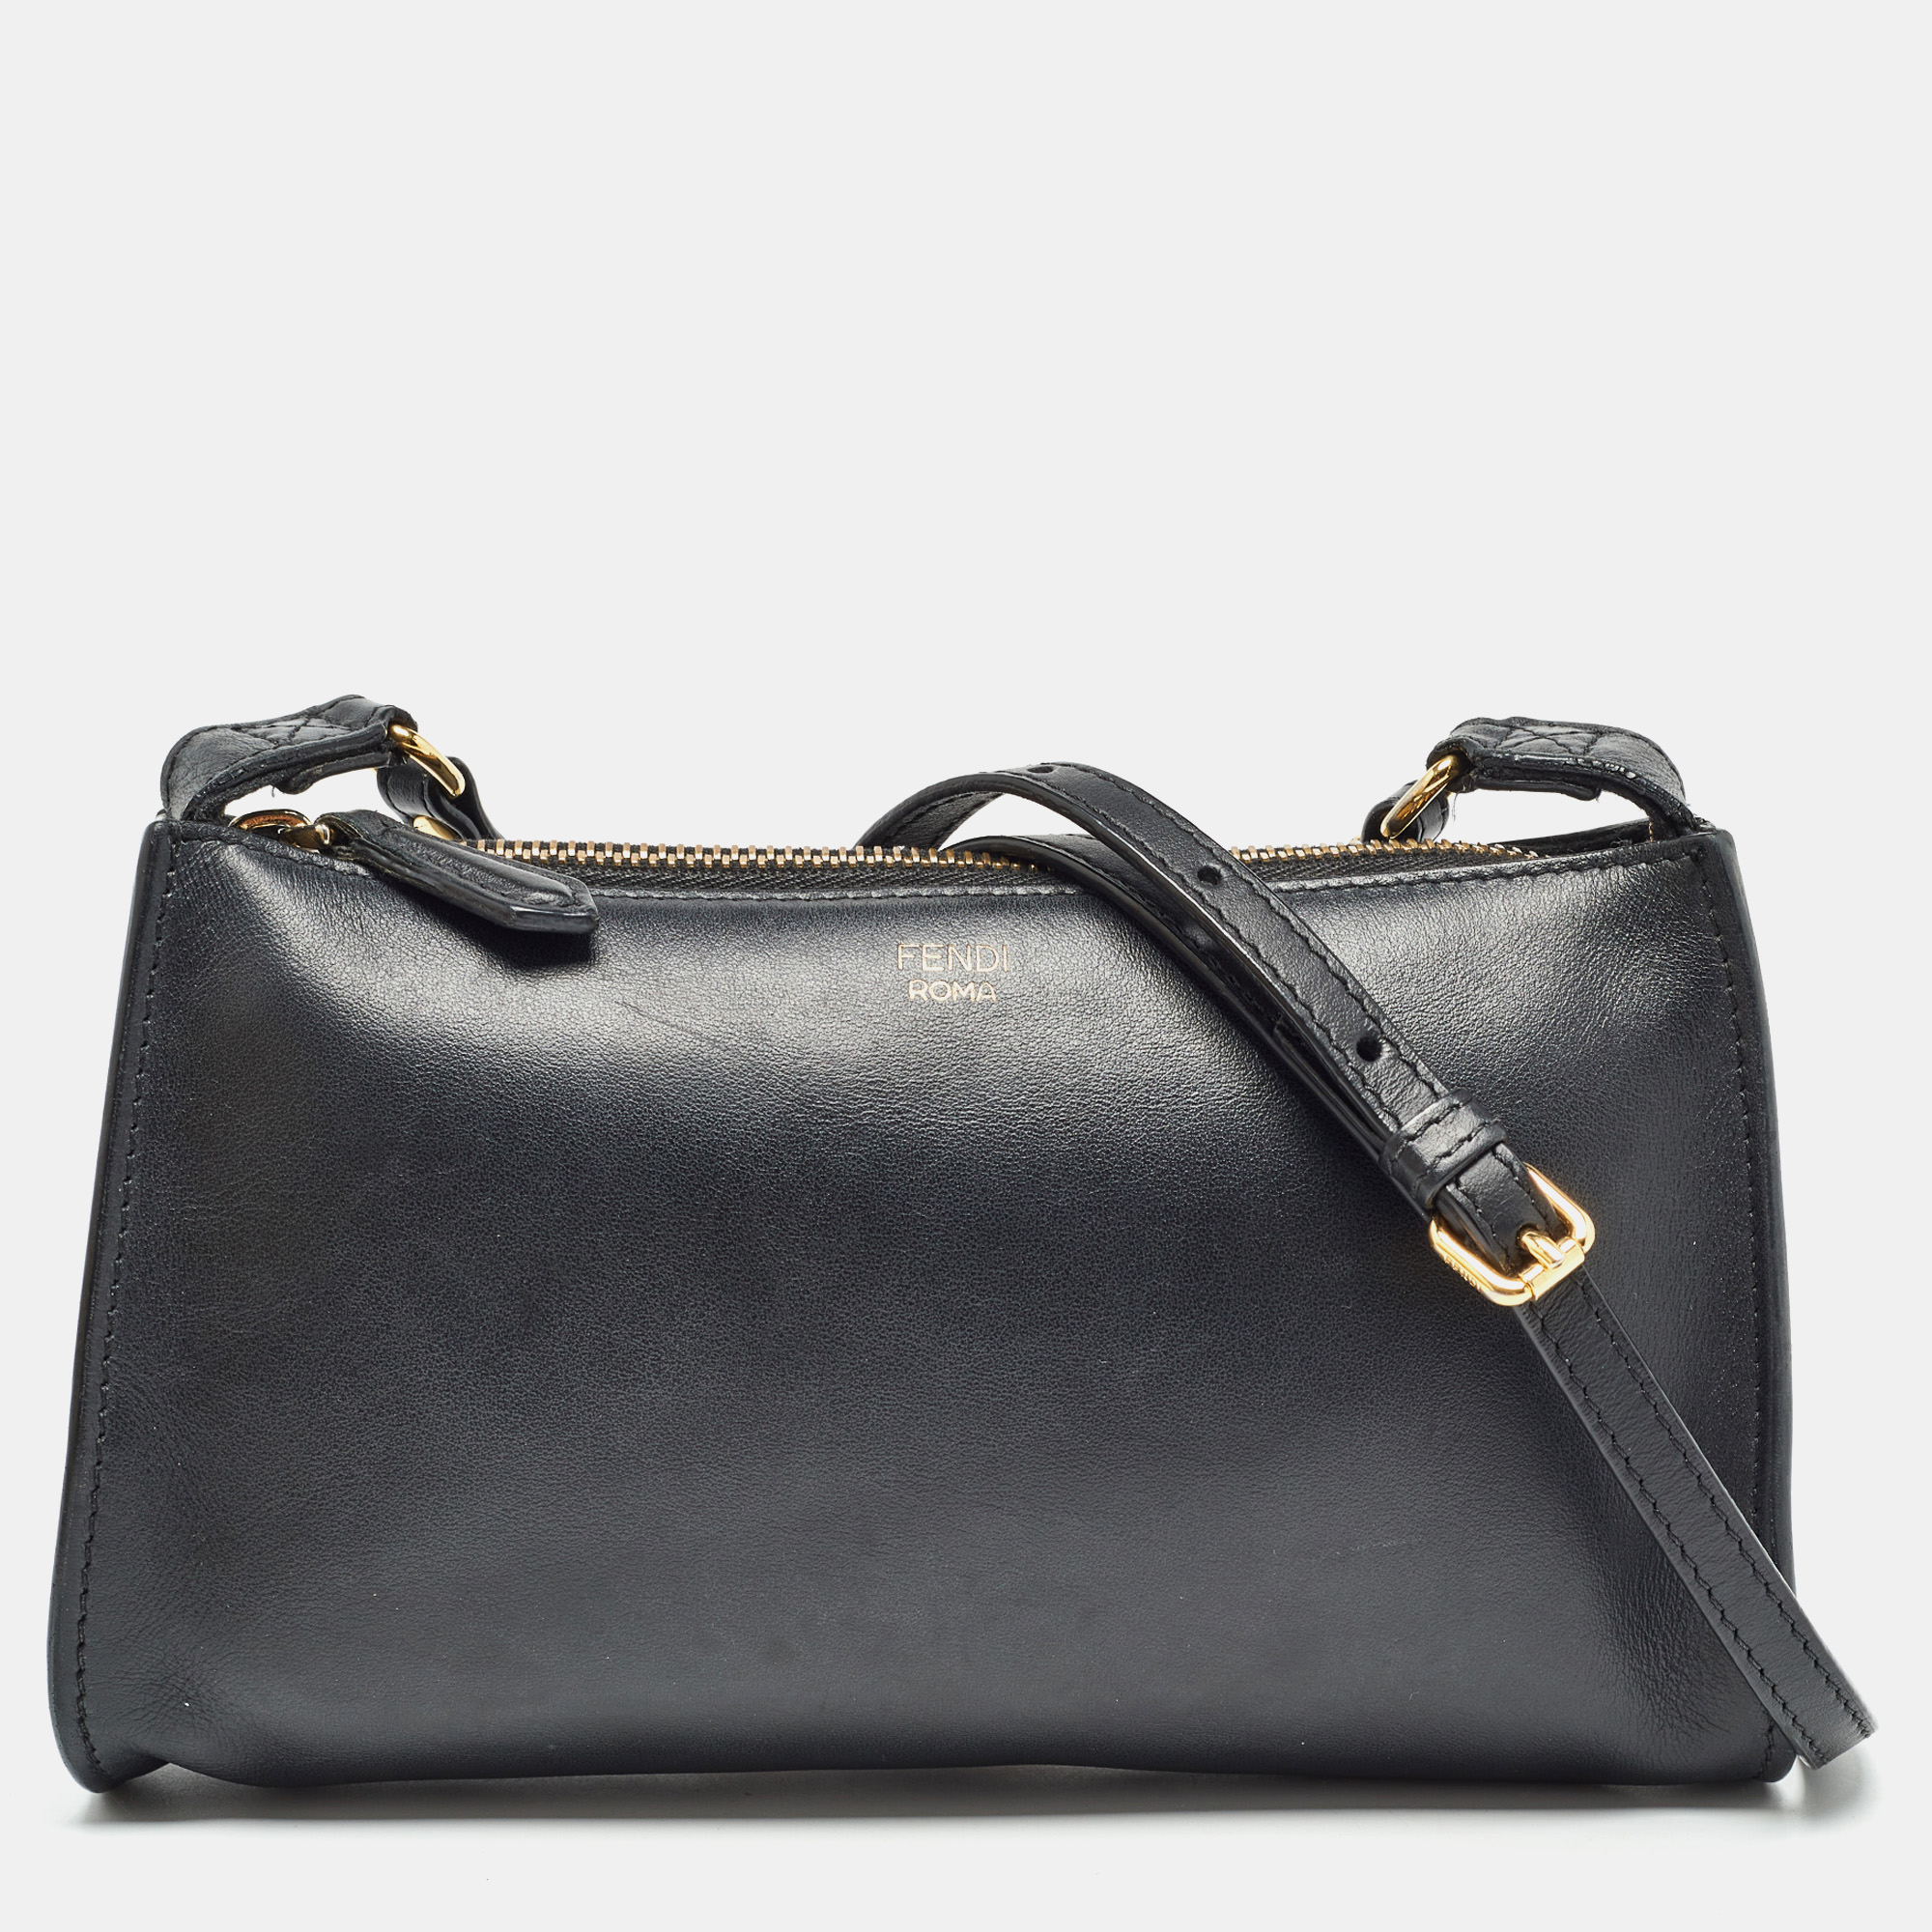 Fendi black leather pochette crossbody bag